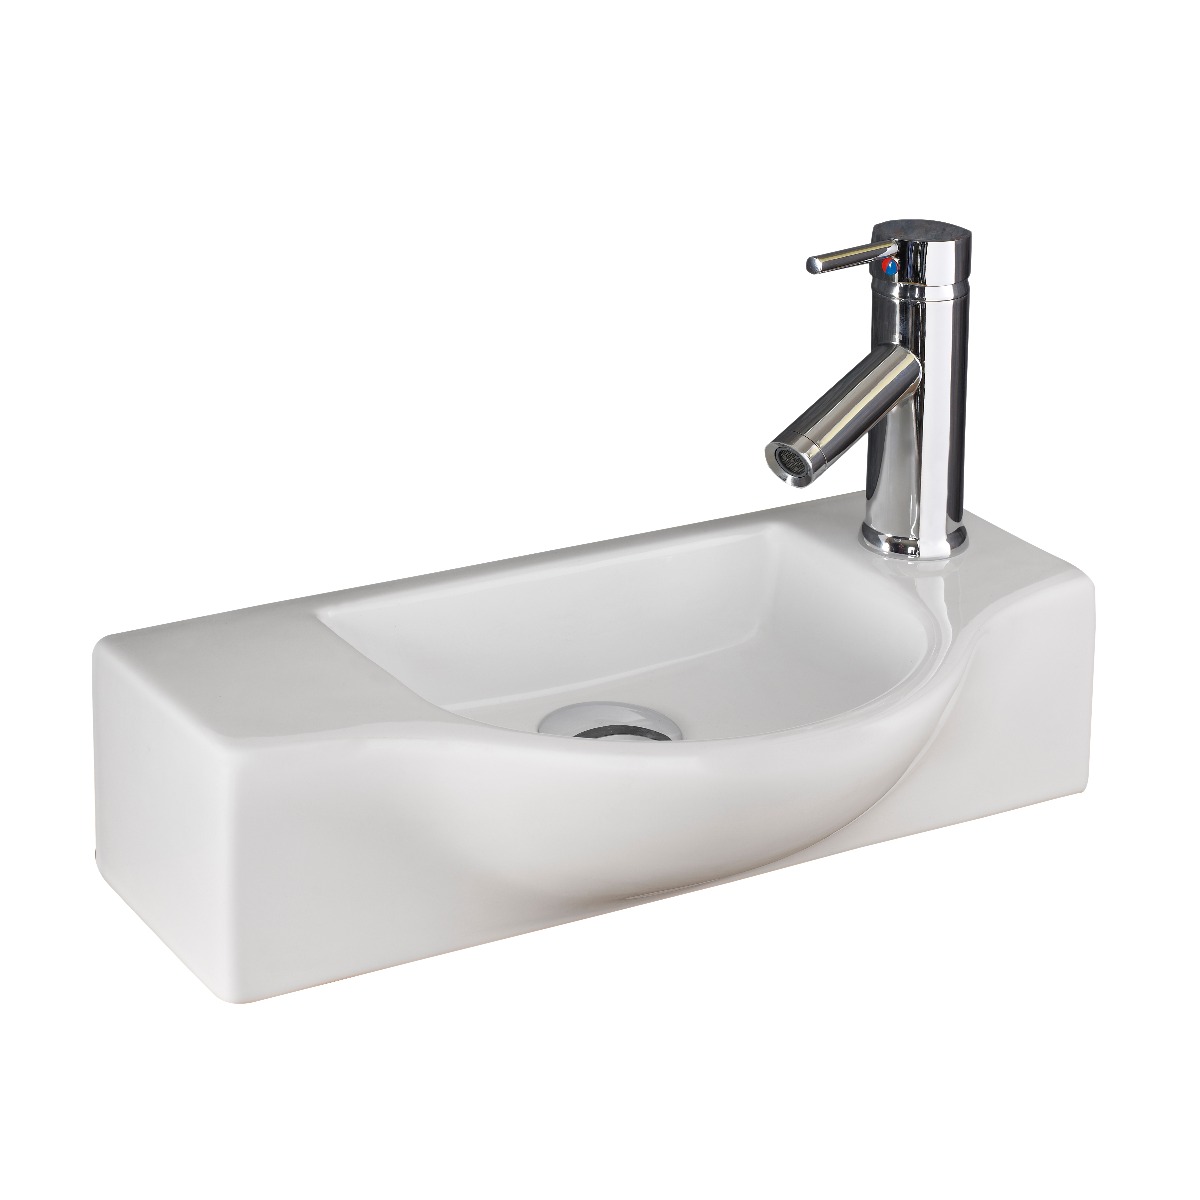 Clickbasin Narrow Wall Mounted Slim Basin Bathroom Sink 510mm X 230mm Porto Diy Tools Kitchen Bath Fixtures